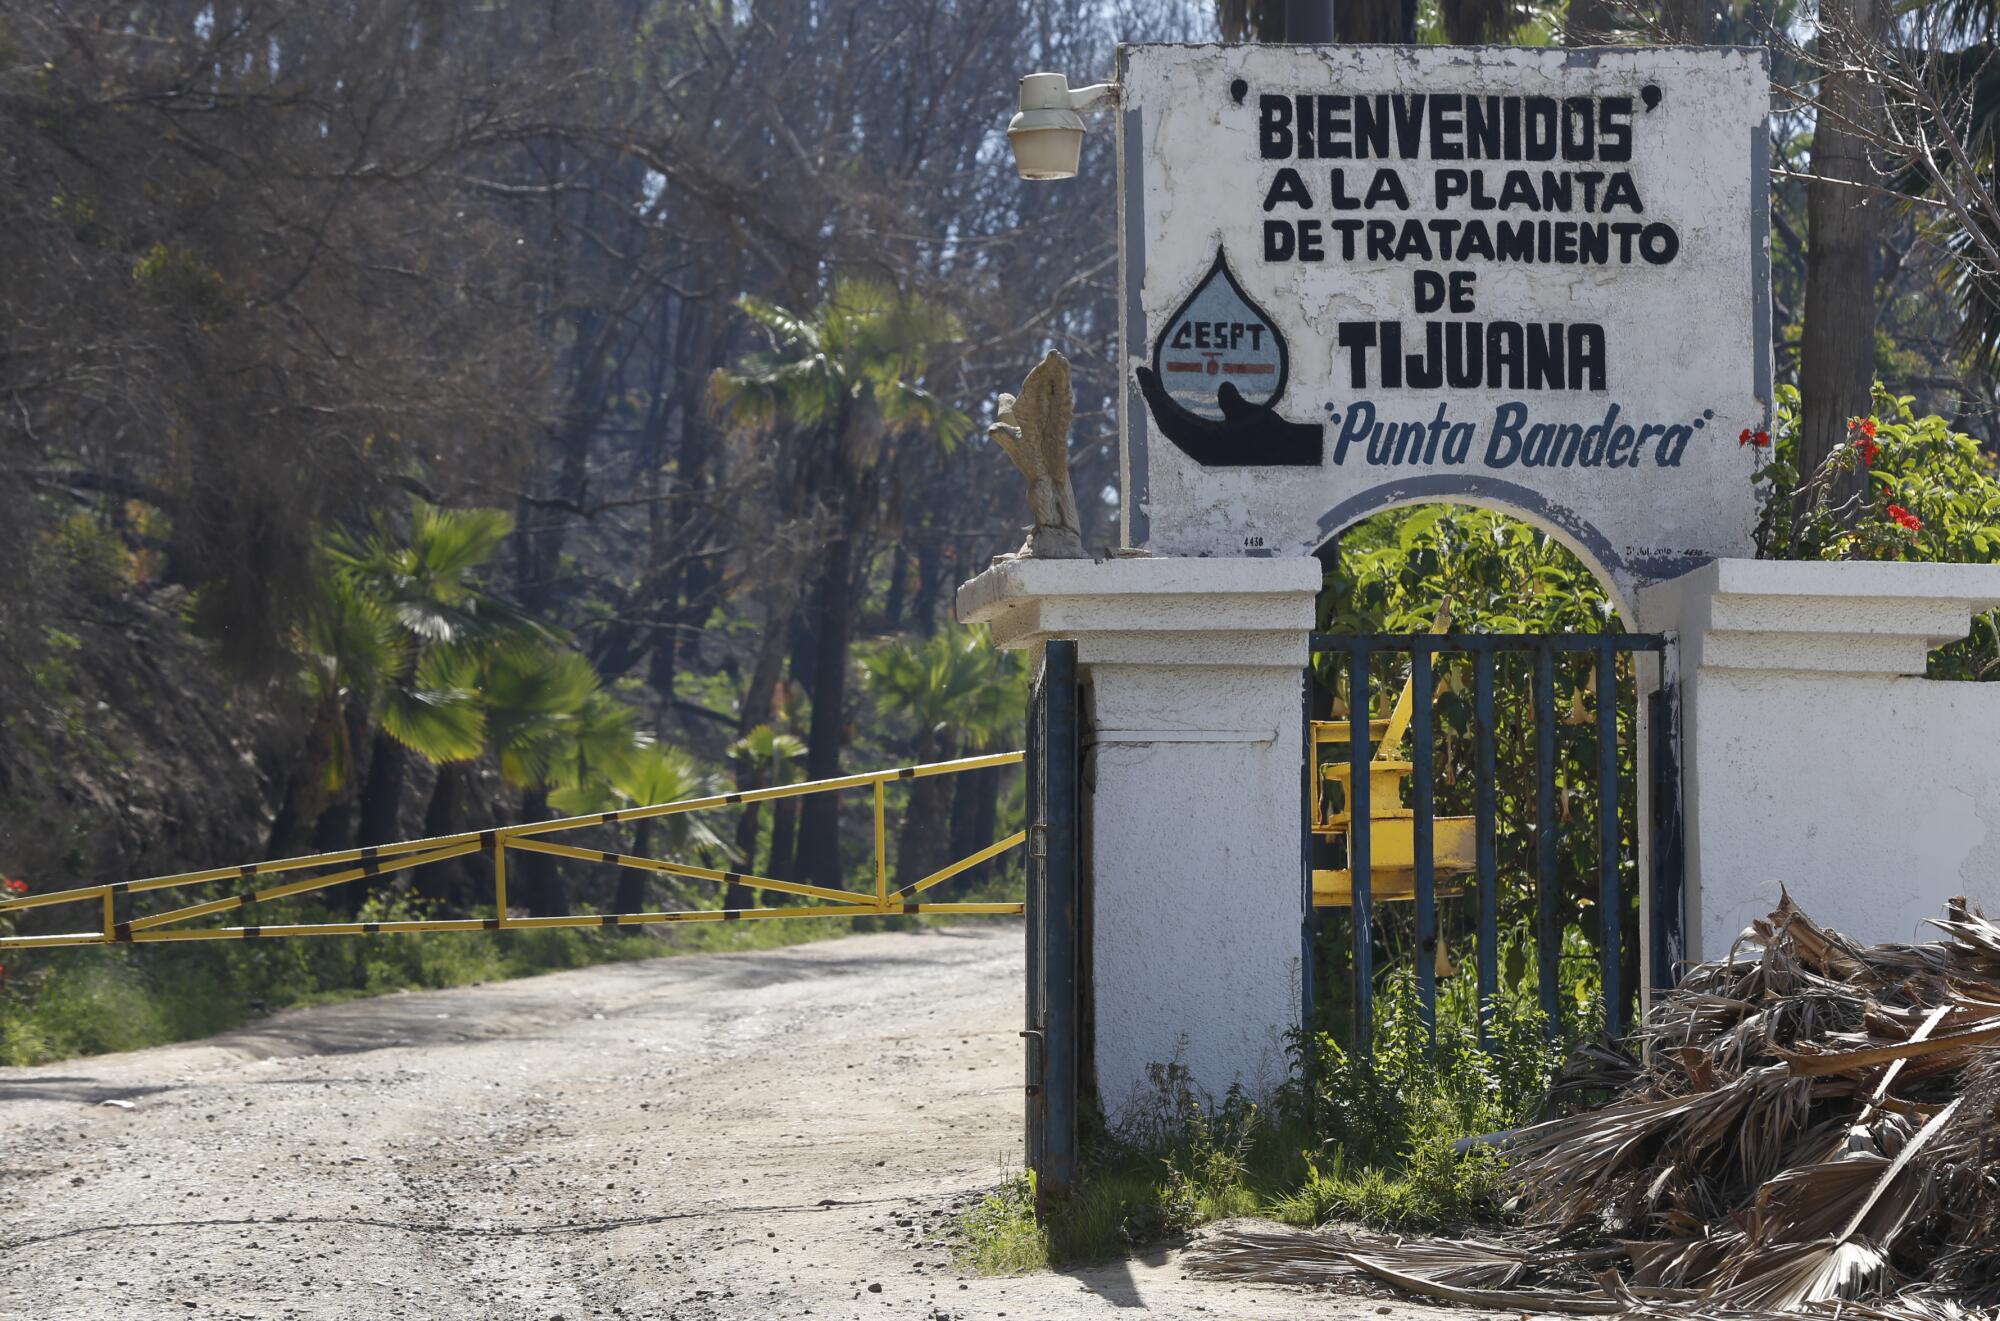 The front gates of the San Antonio de los Buenos sewage treatment plant.